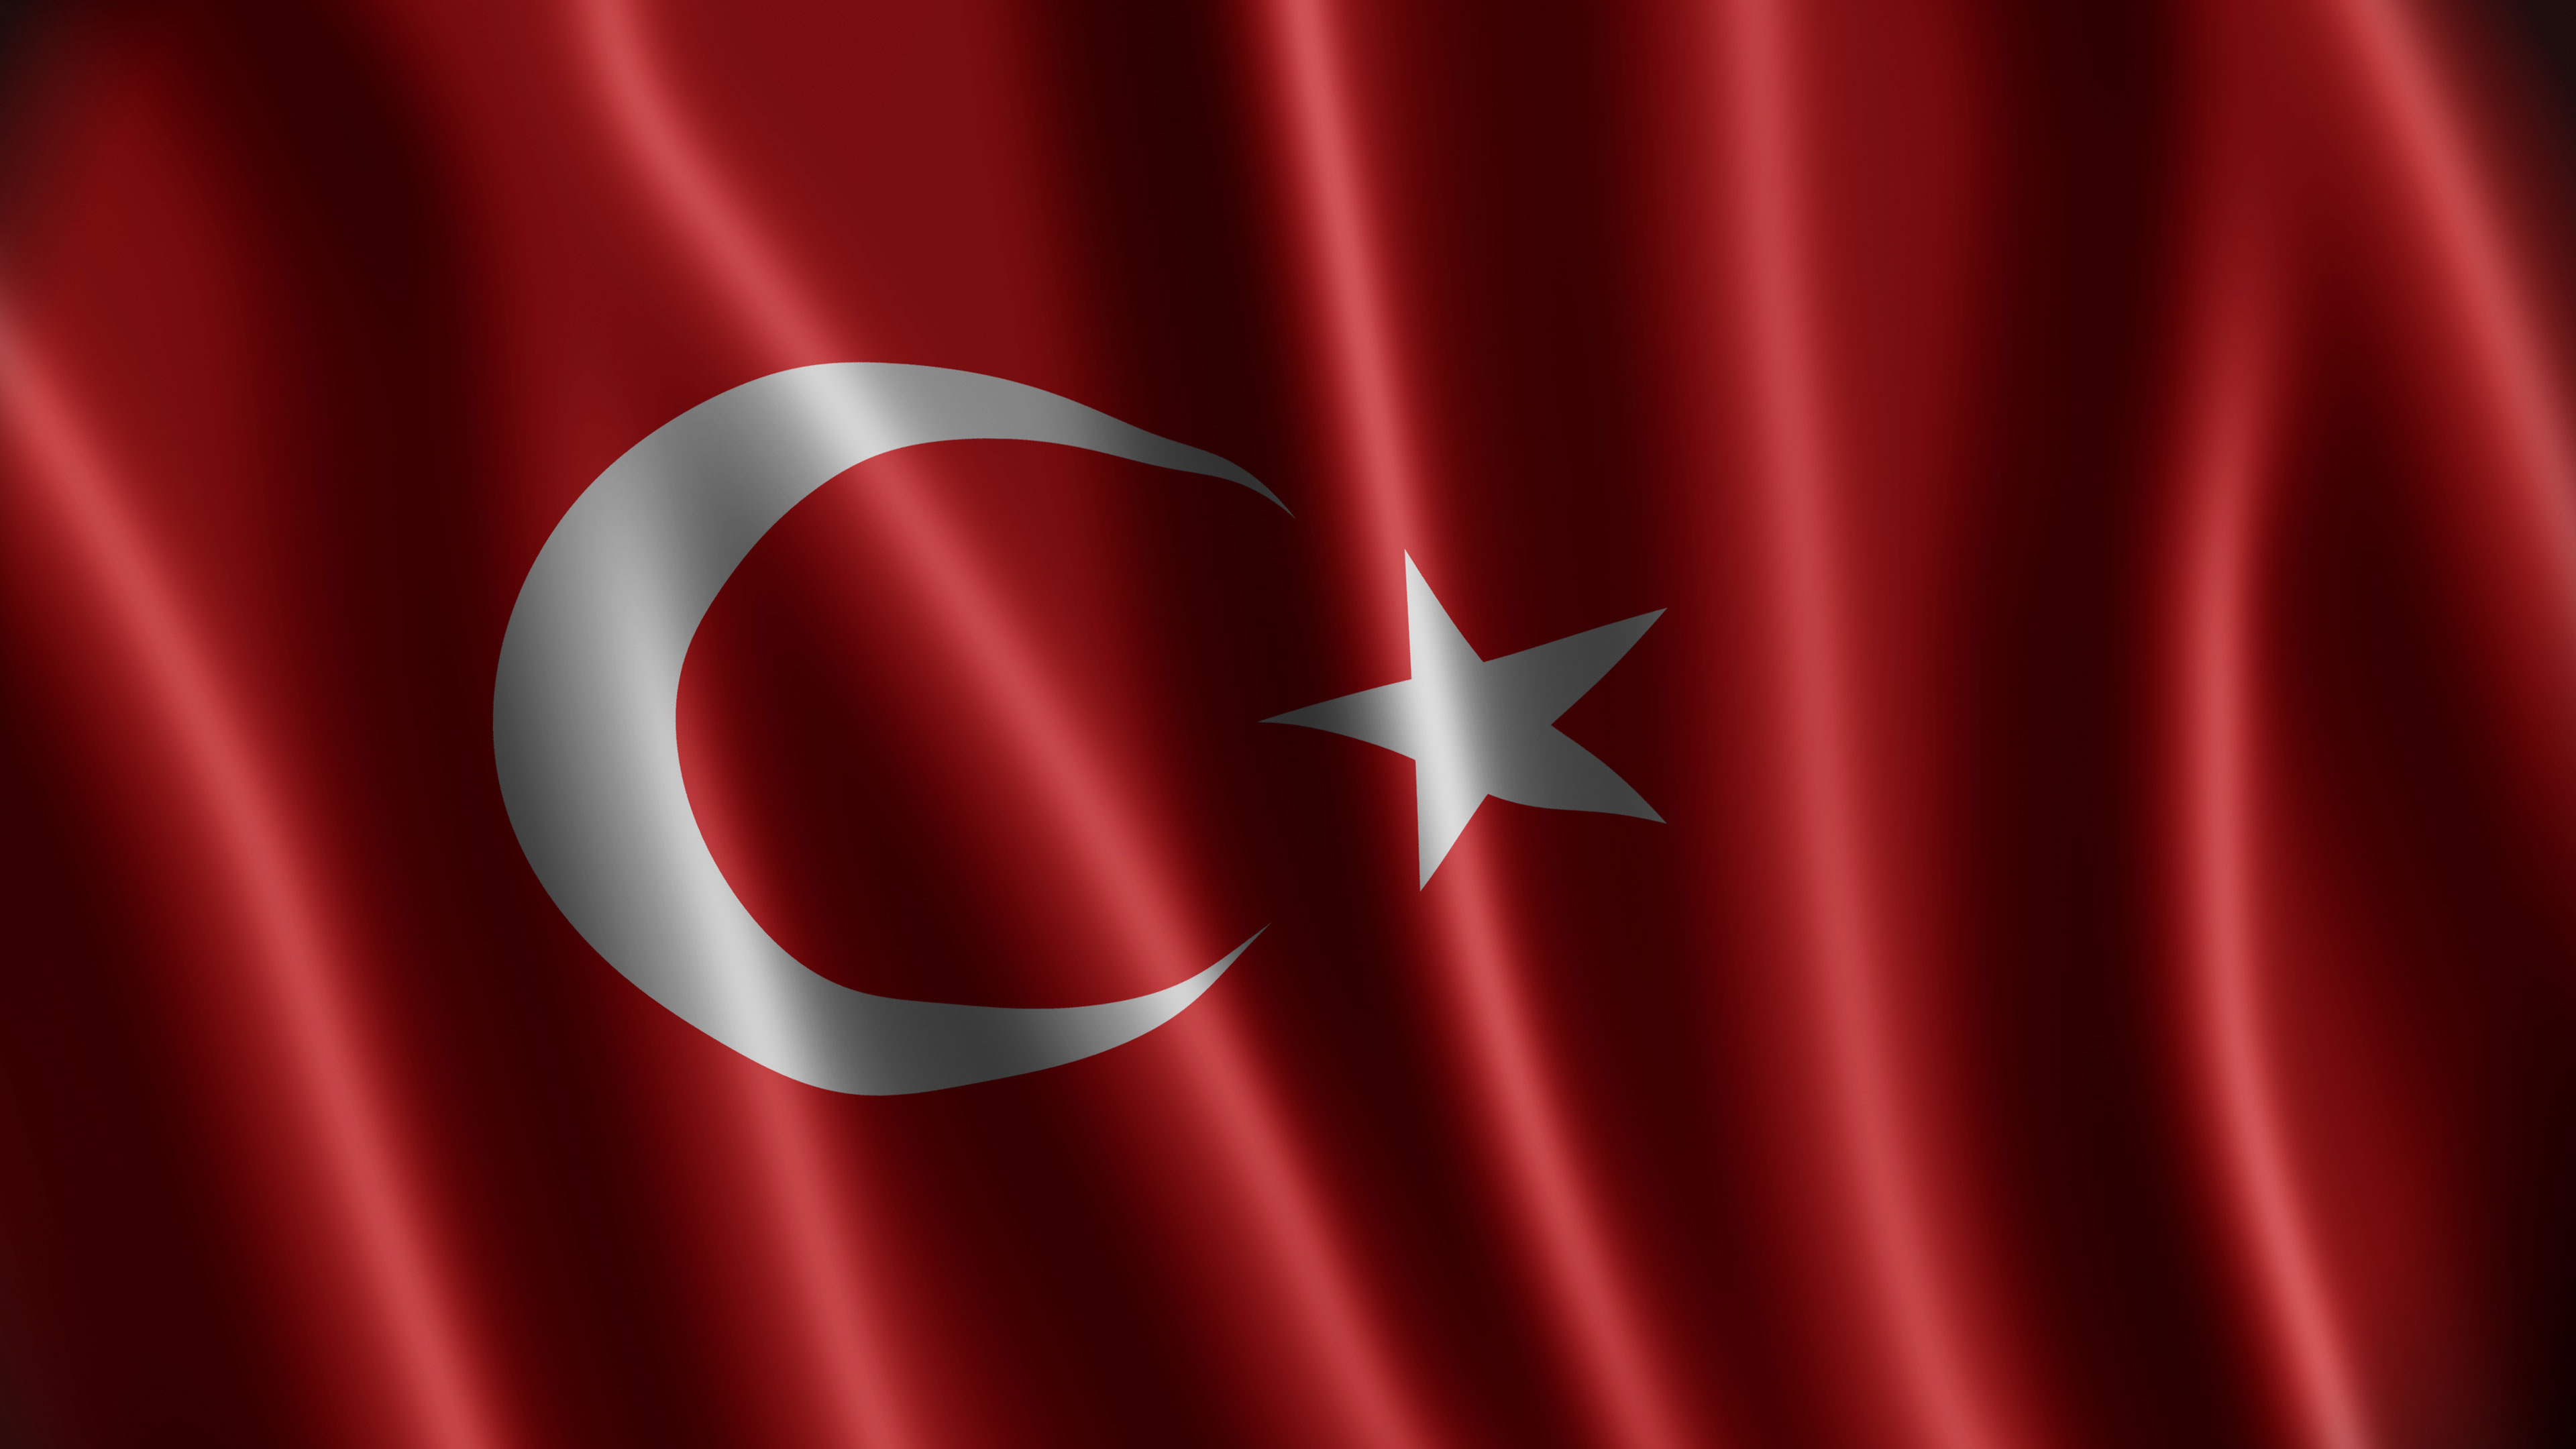 4k ultrahd turk bayraklari resimleri 10